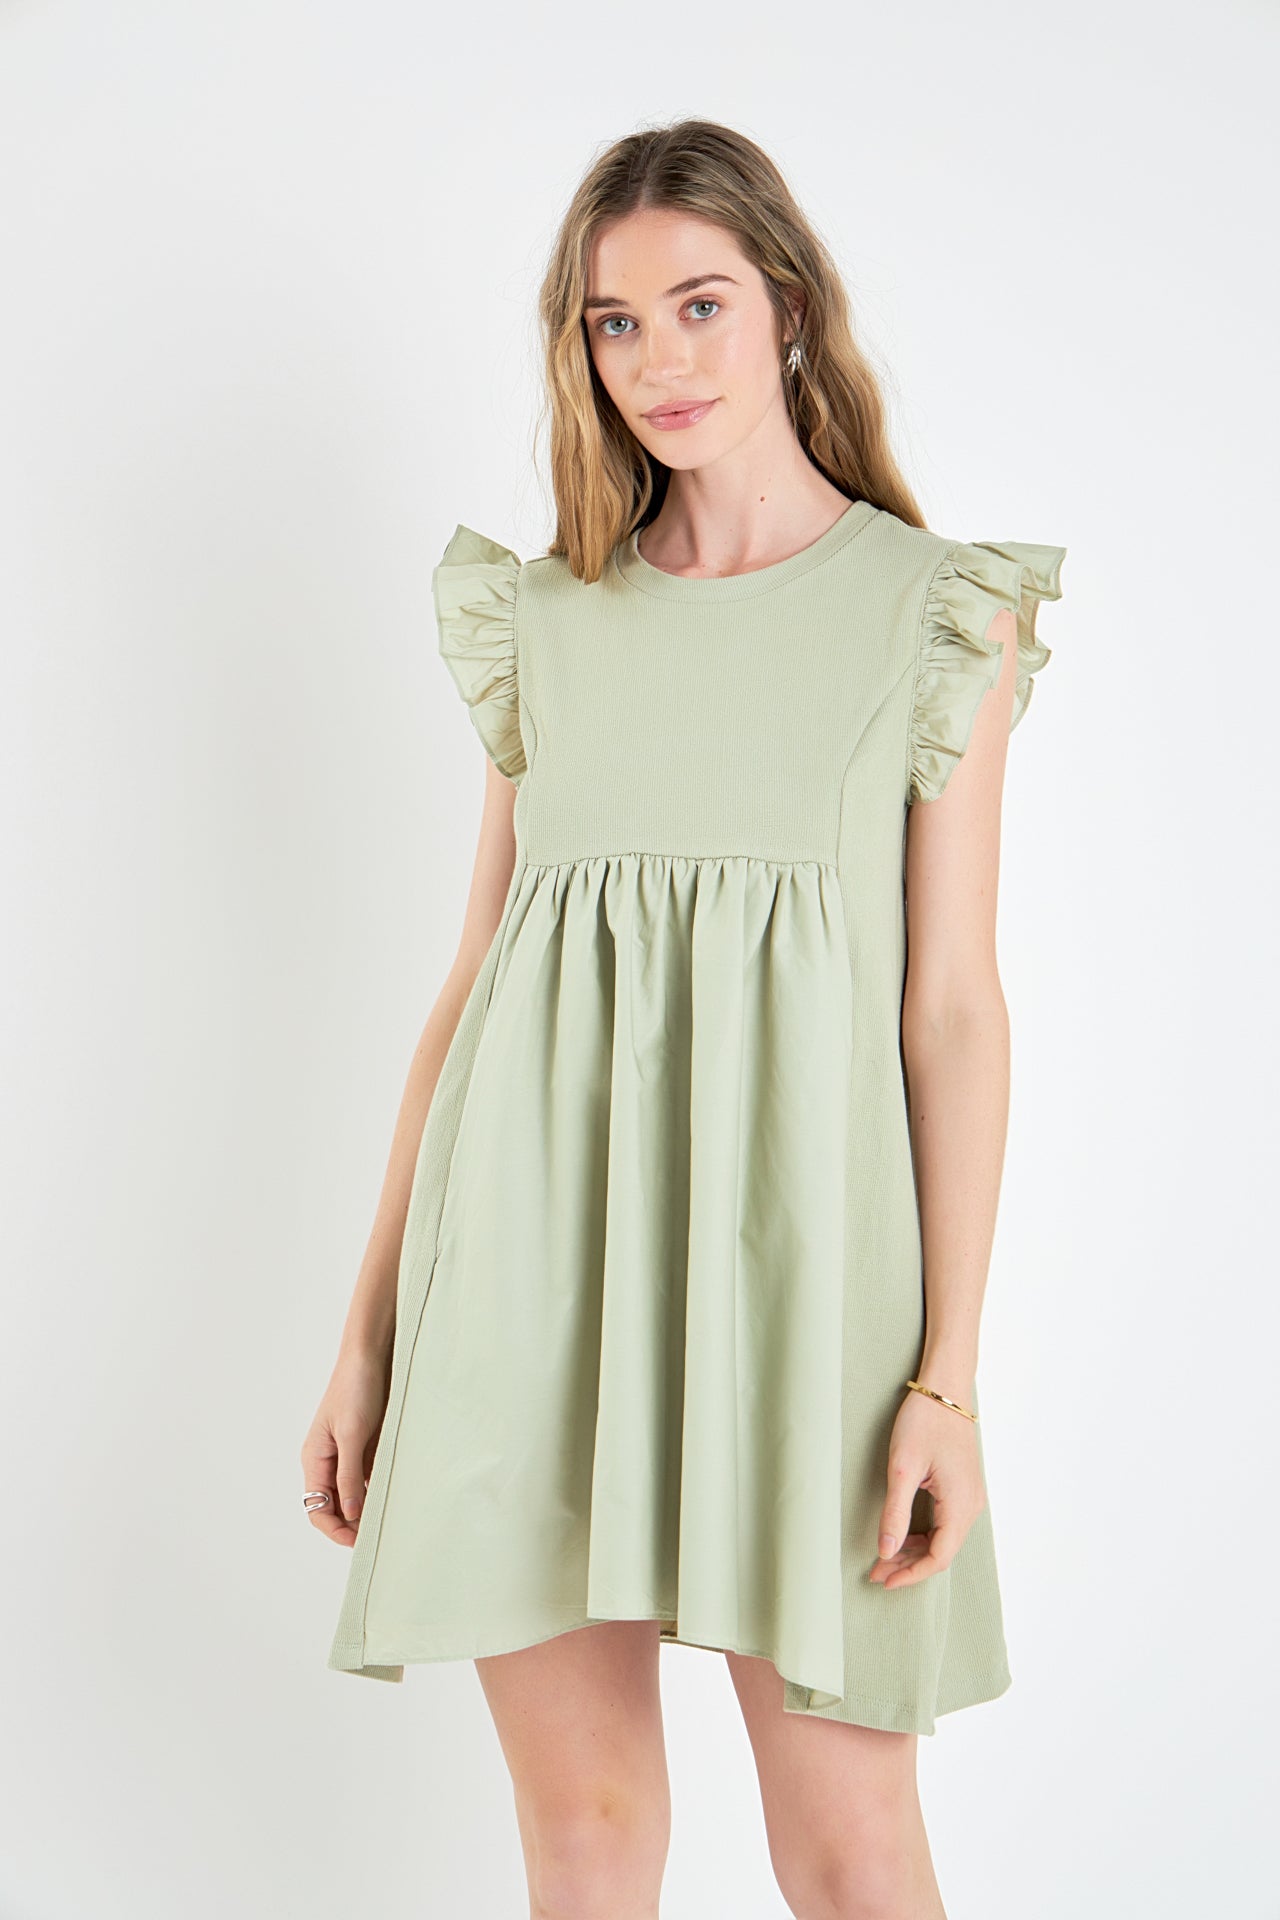 ENGLISH FACTORY - Mixed Media Ruffle Sleeve Mini Dress - DRESSES available at Objectrare